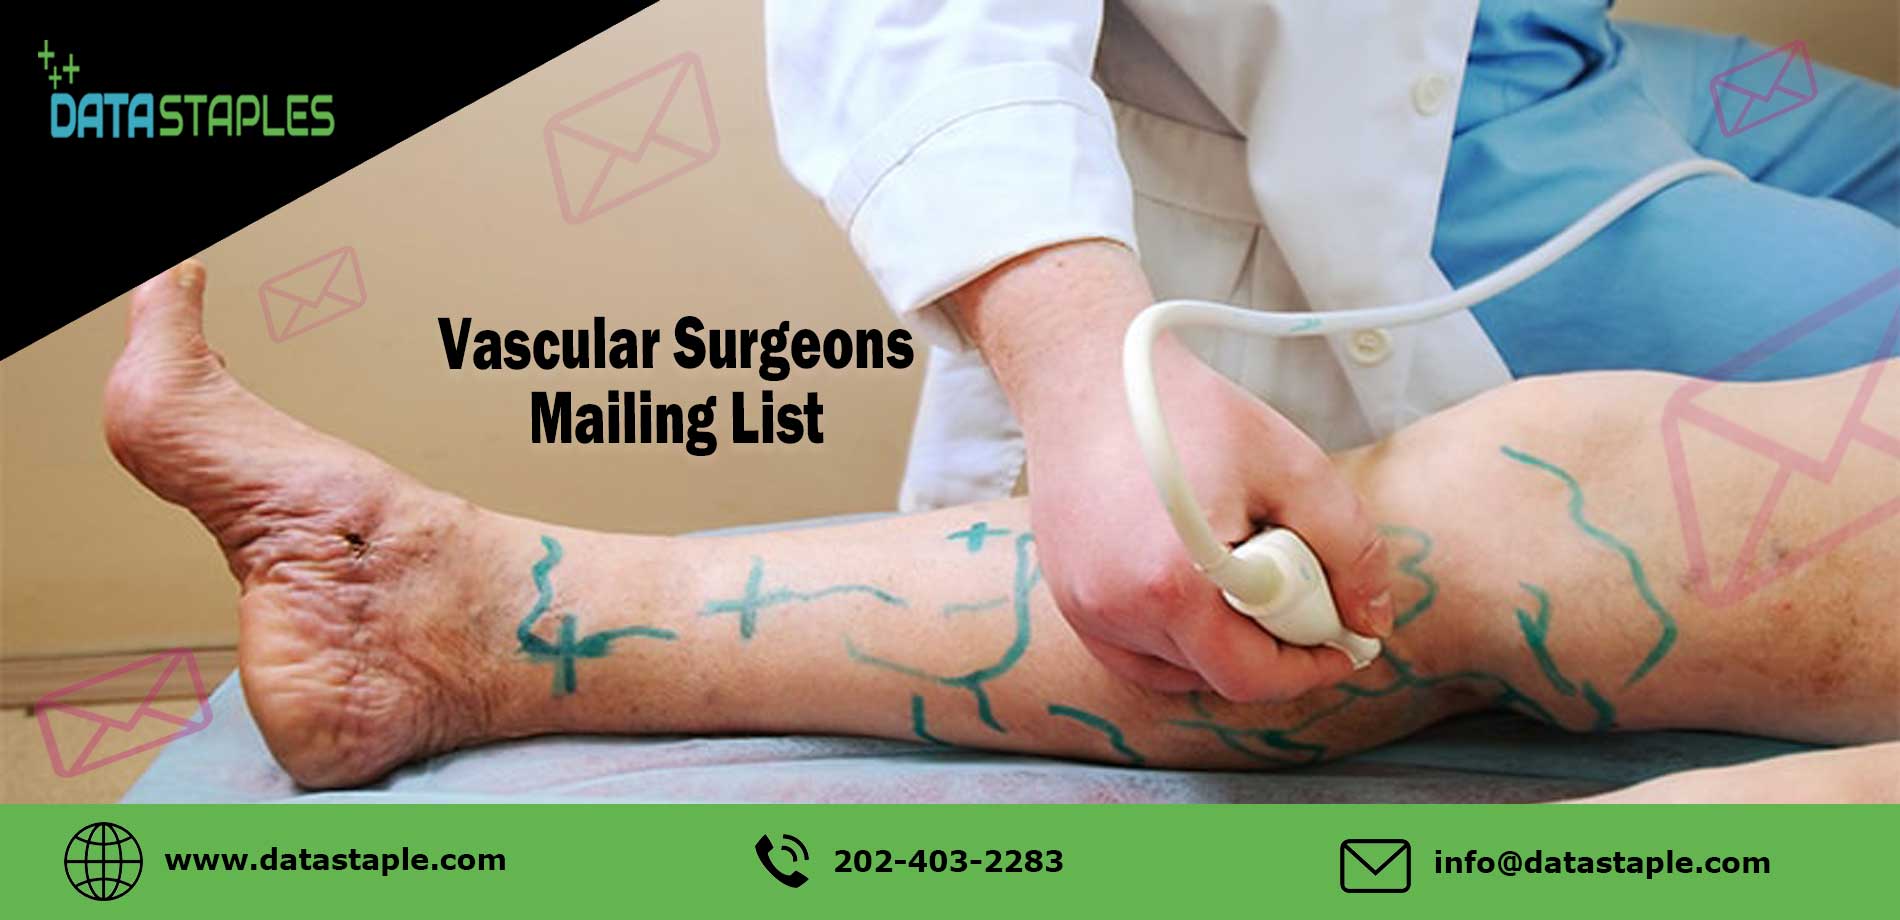 Vascular Surgeons Mailing List | DataStaples